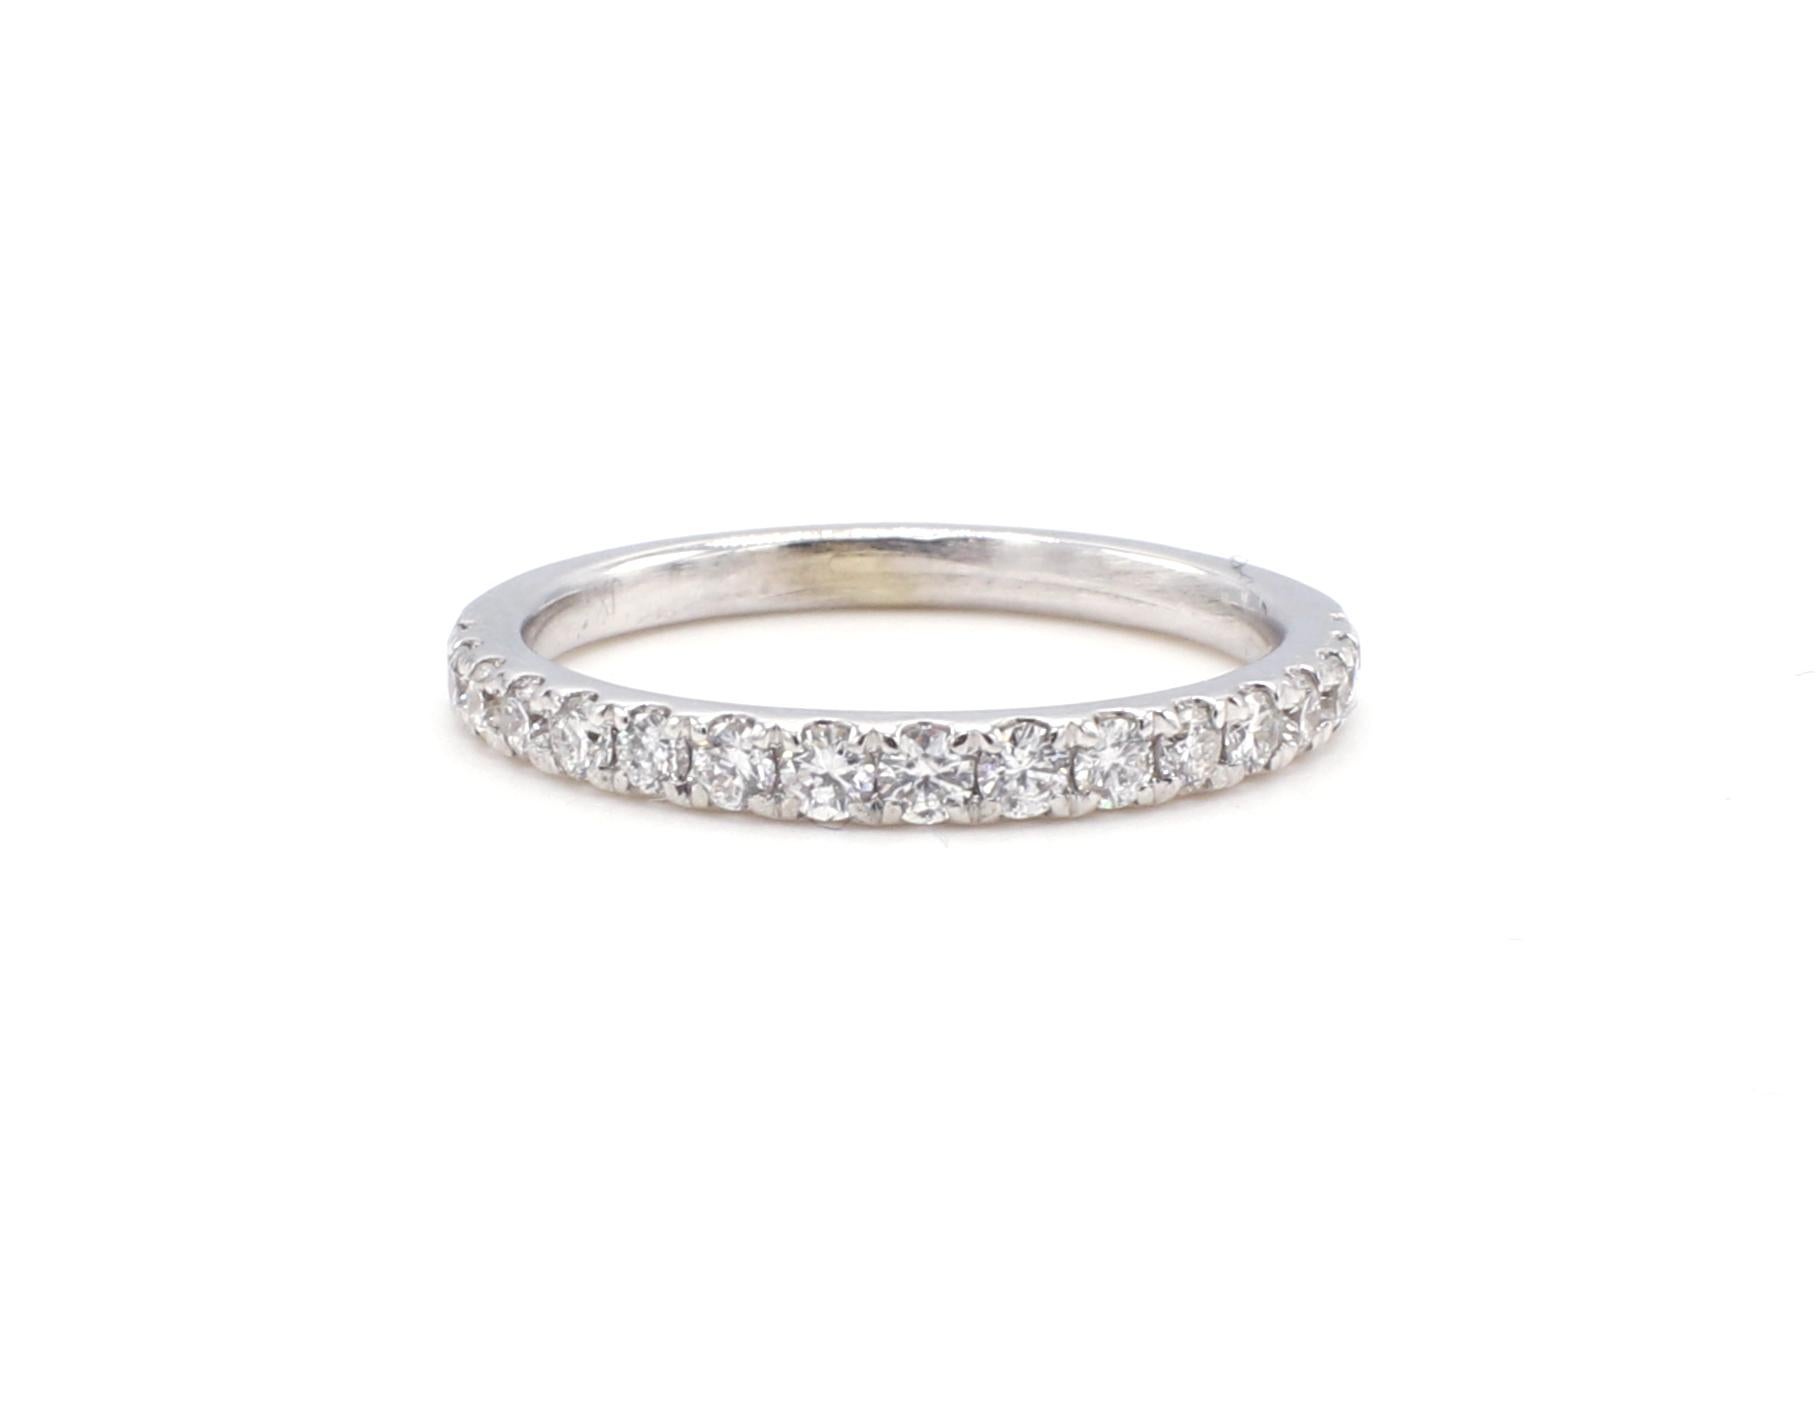 14 Karat White Gold .32 Carat Round Natural Diamond Half Wedding Band Ring

Metal: 14k white gold
Weight: 1.78 grams
Diamonds: Approx. .32 CTW G-H VS round natural diamonds
Size: 5 (US)
Width: 2mm